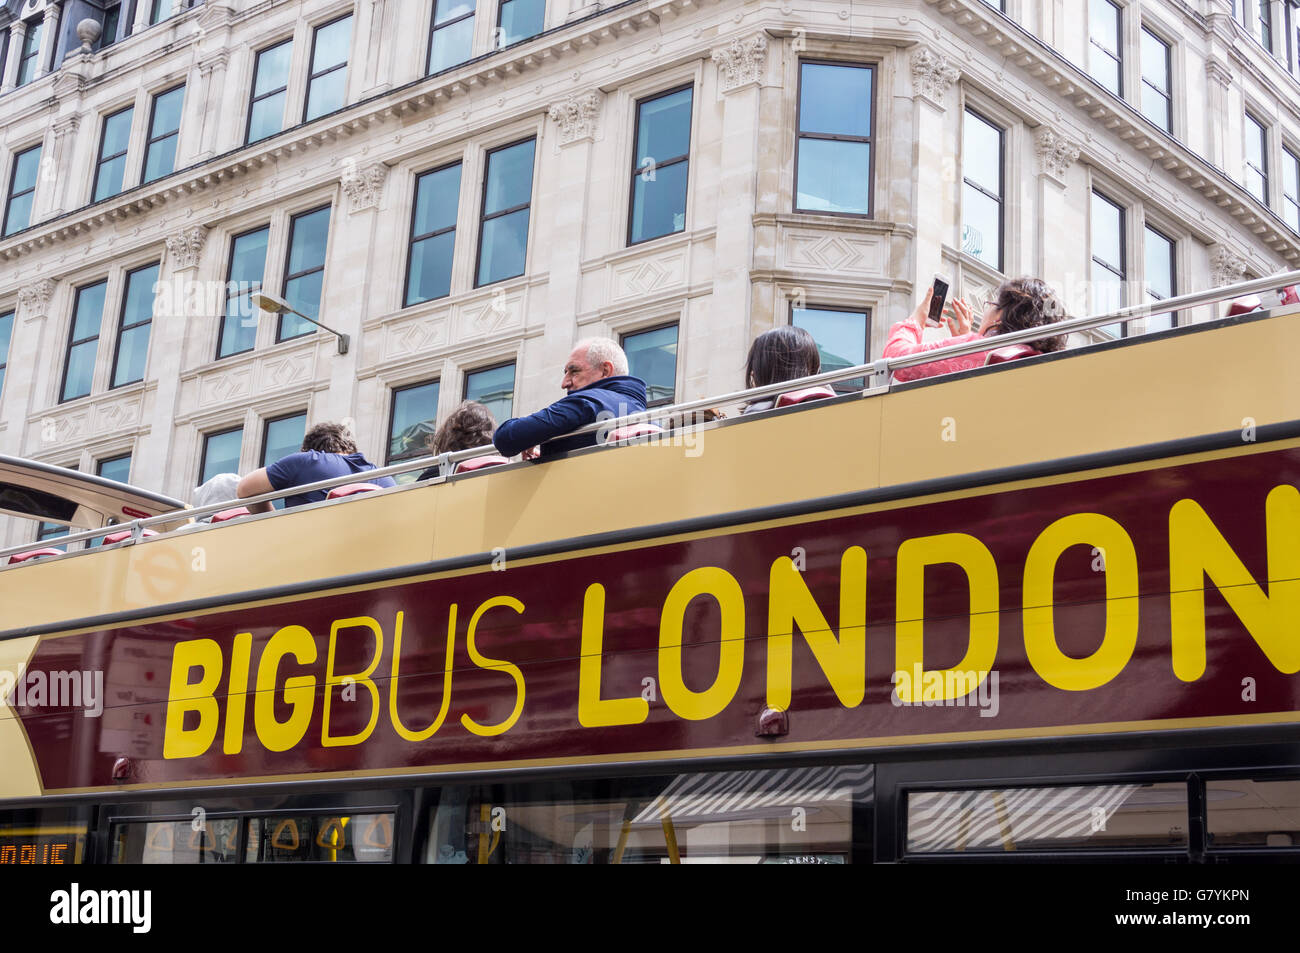 Big Bus London tour bus, London, England Stock Photo